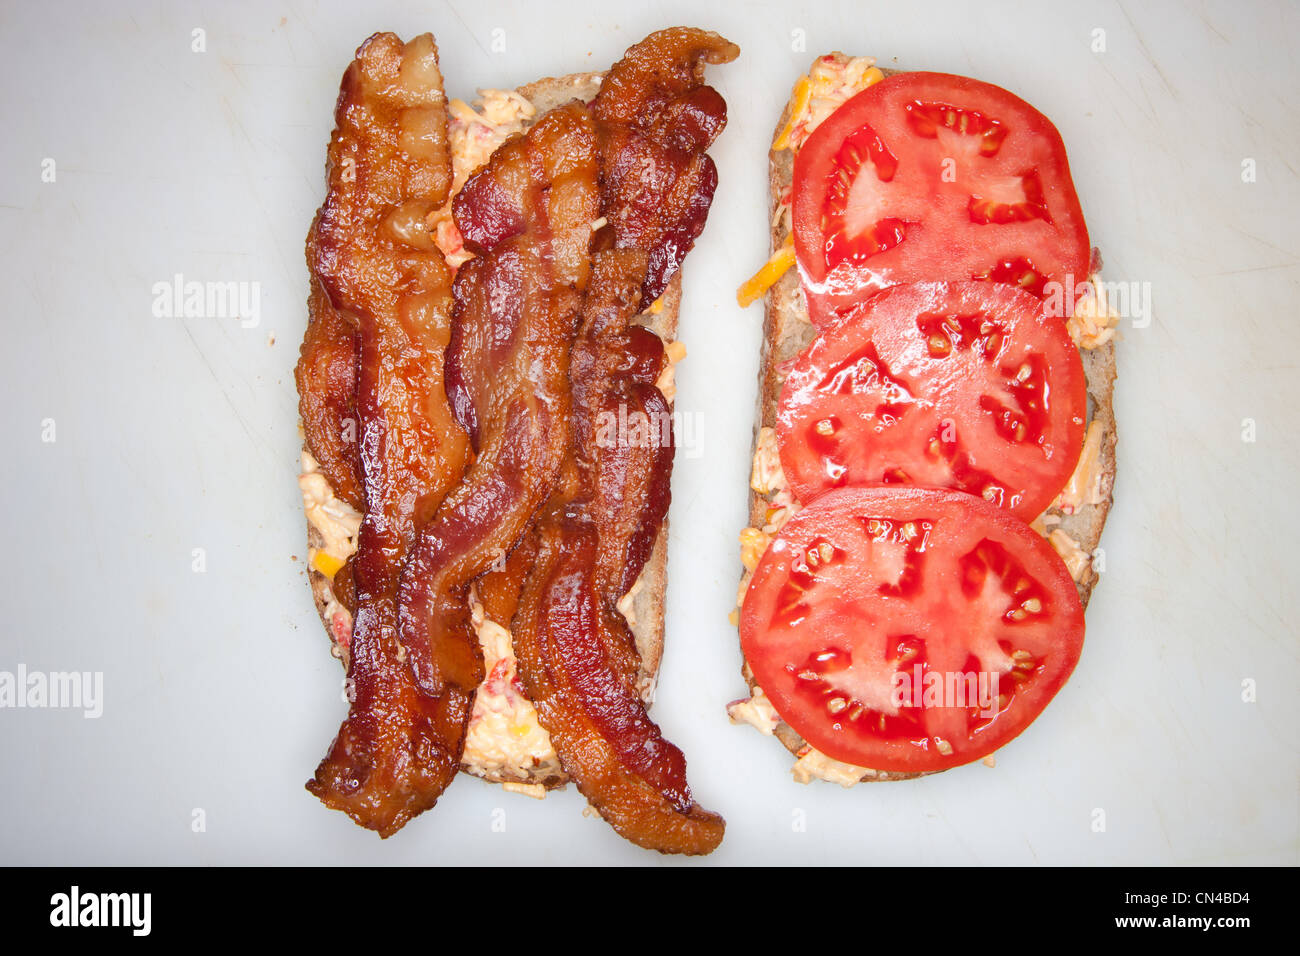 Bacon and tomato sandwich Stock Photo